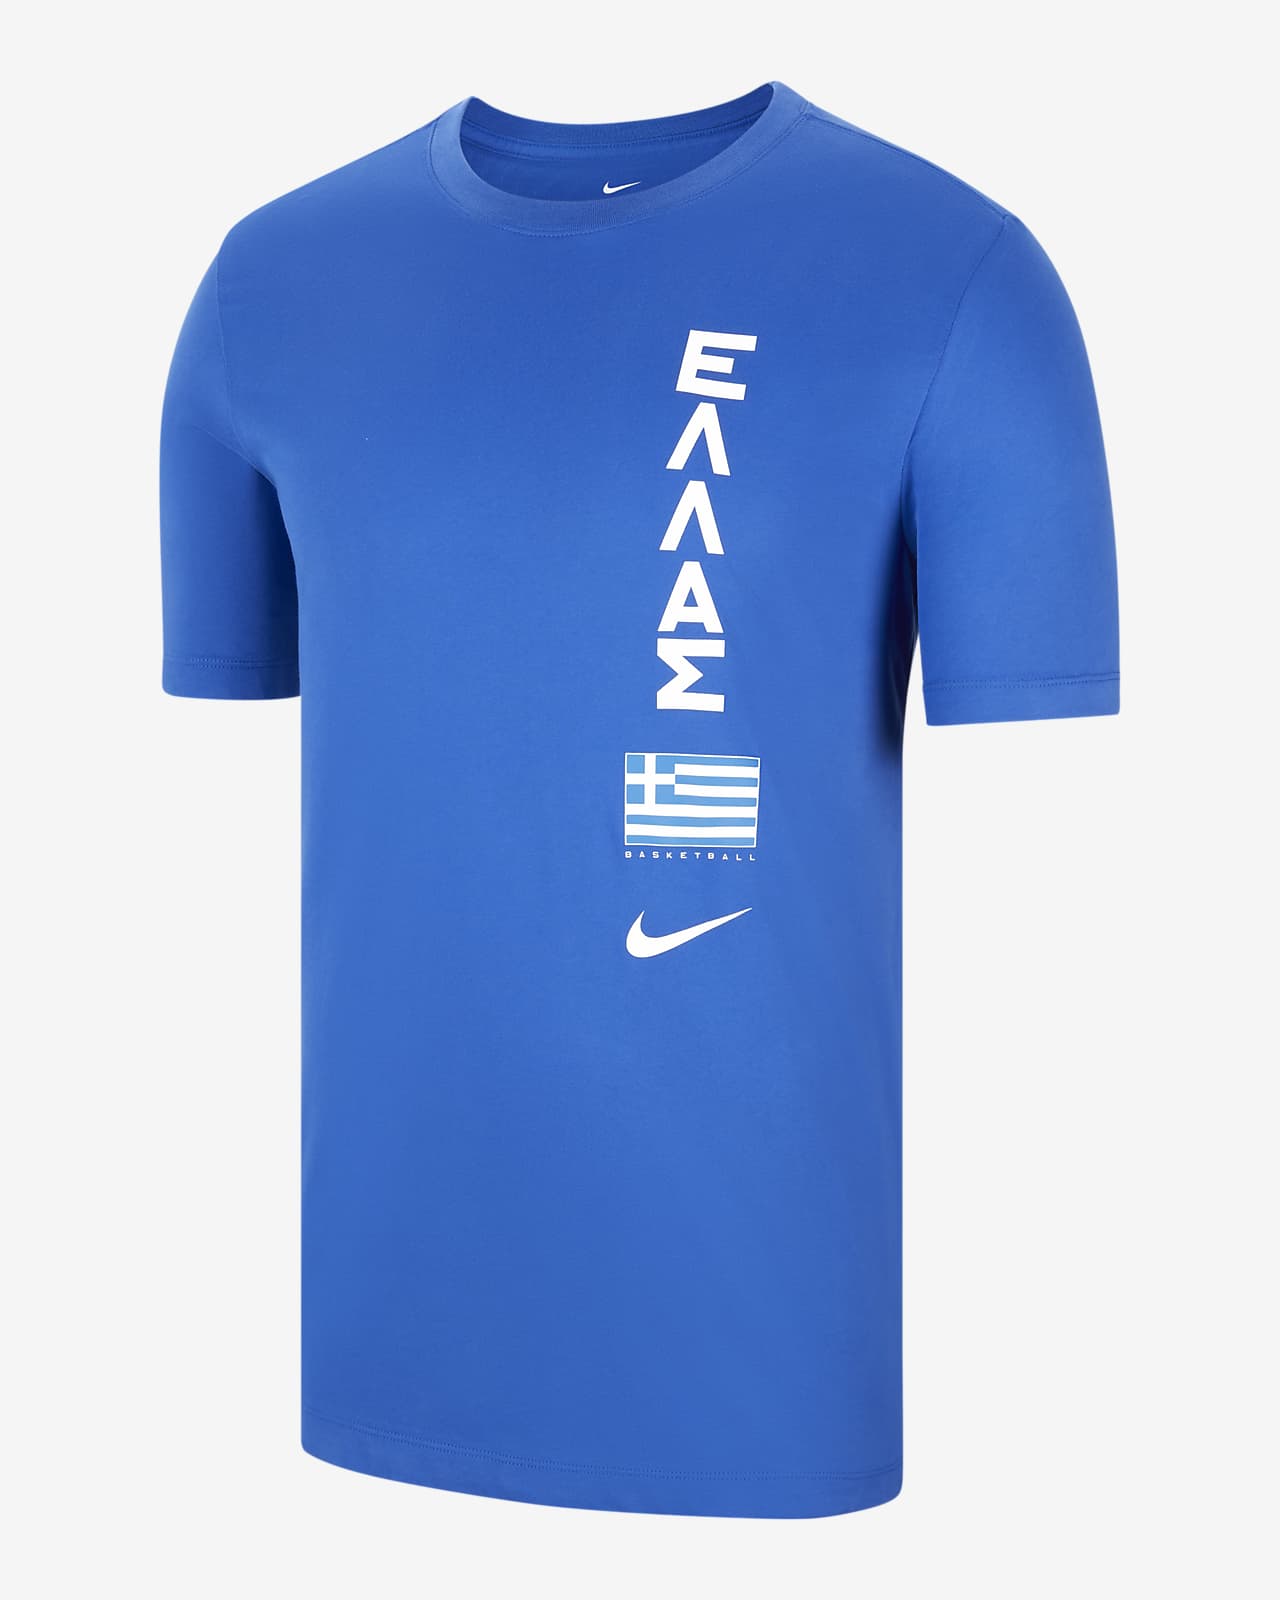 Greece Men's Nike Dri-FIT Basketball T-Shirt. Nike SA